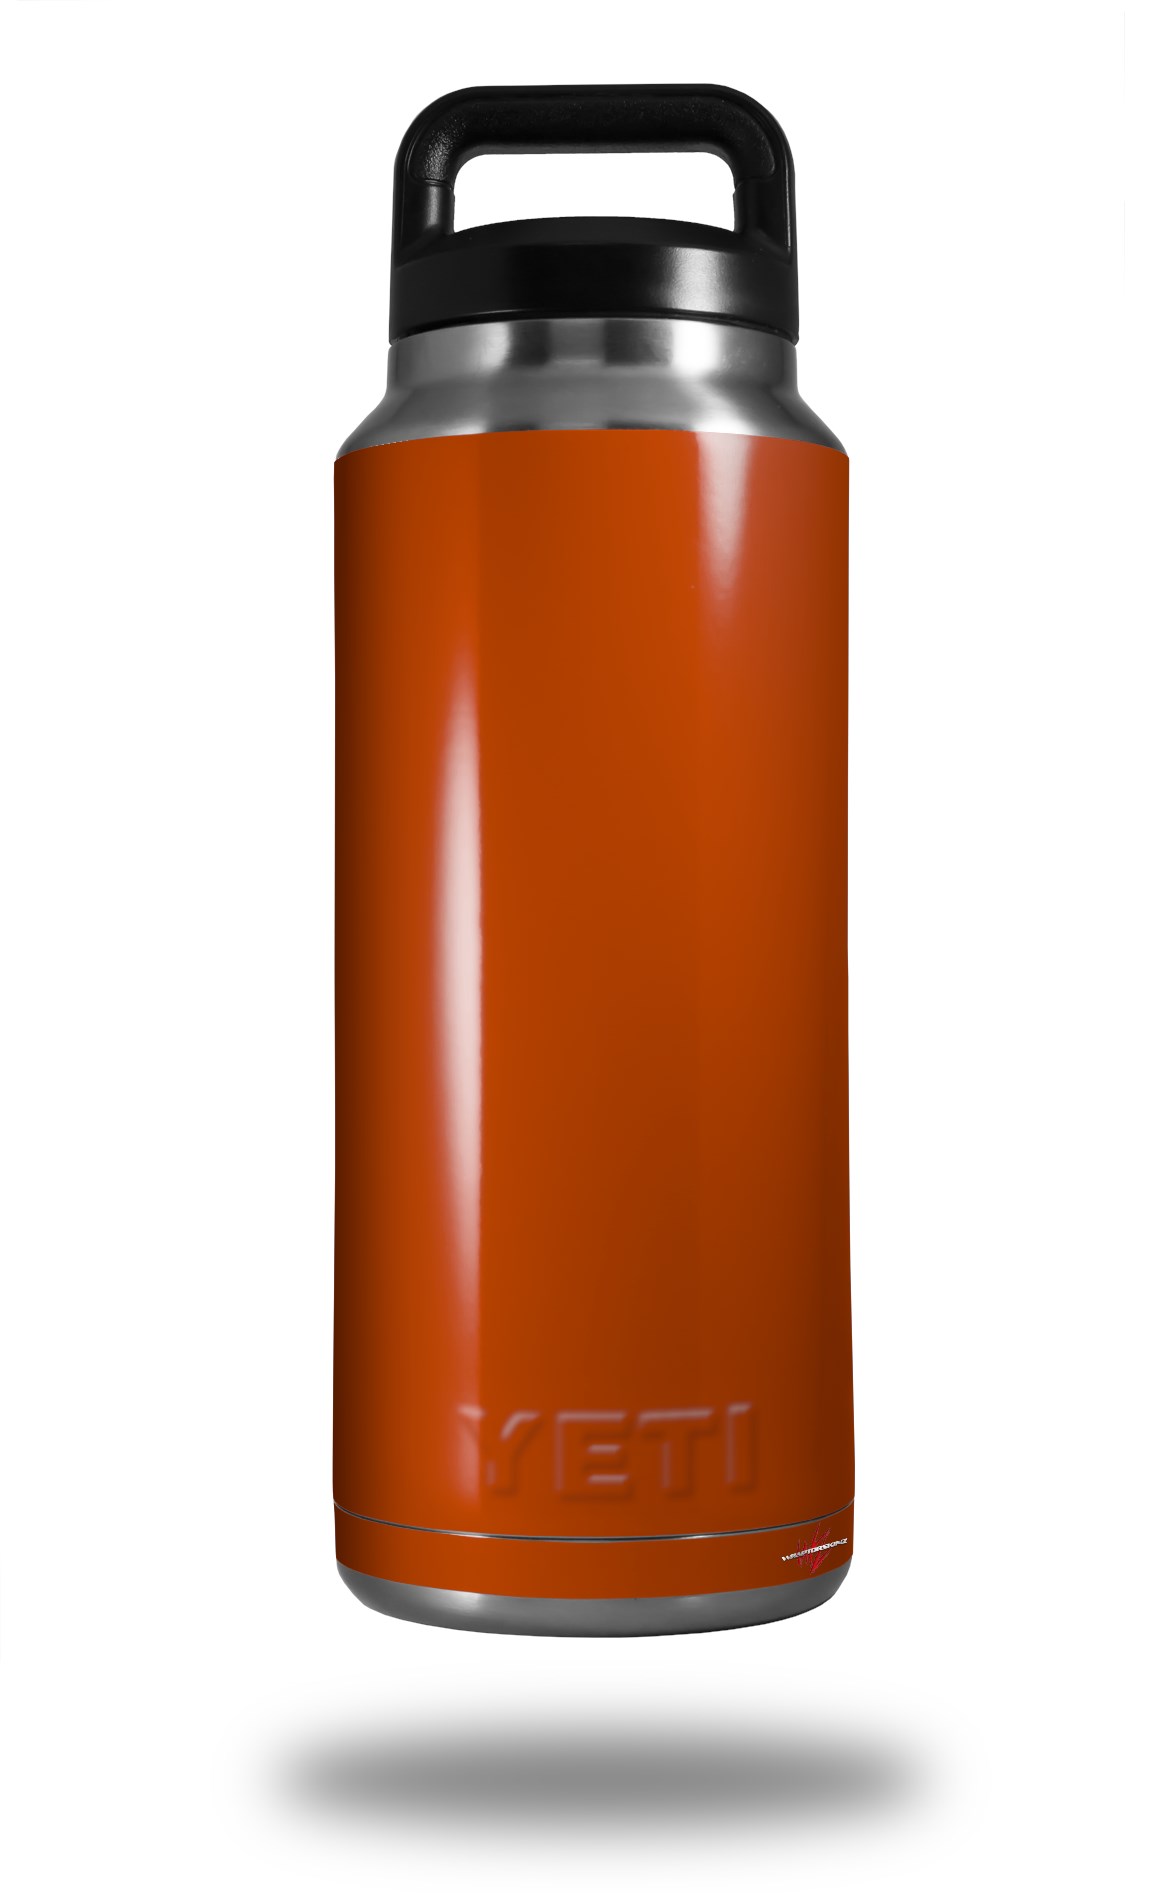 Yeti Rambler Bottle 36oz Solids Collection Burnt Orange